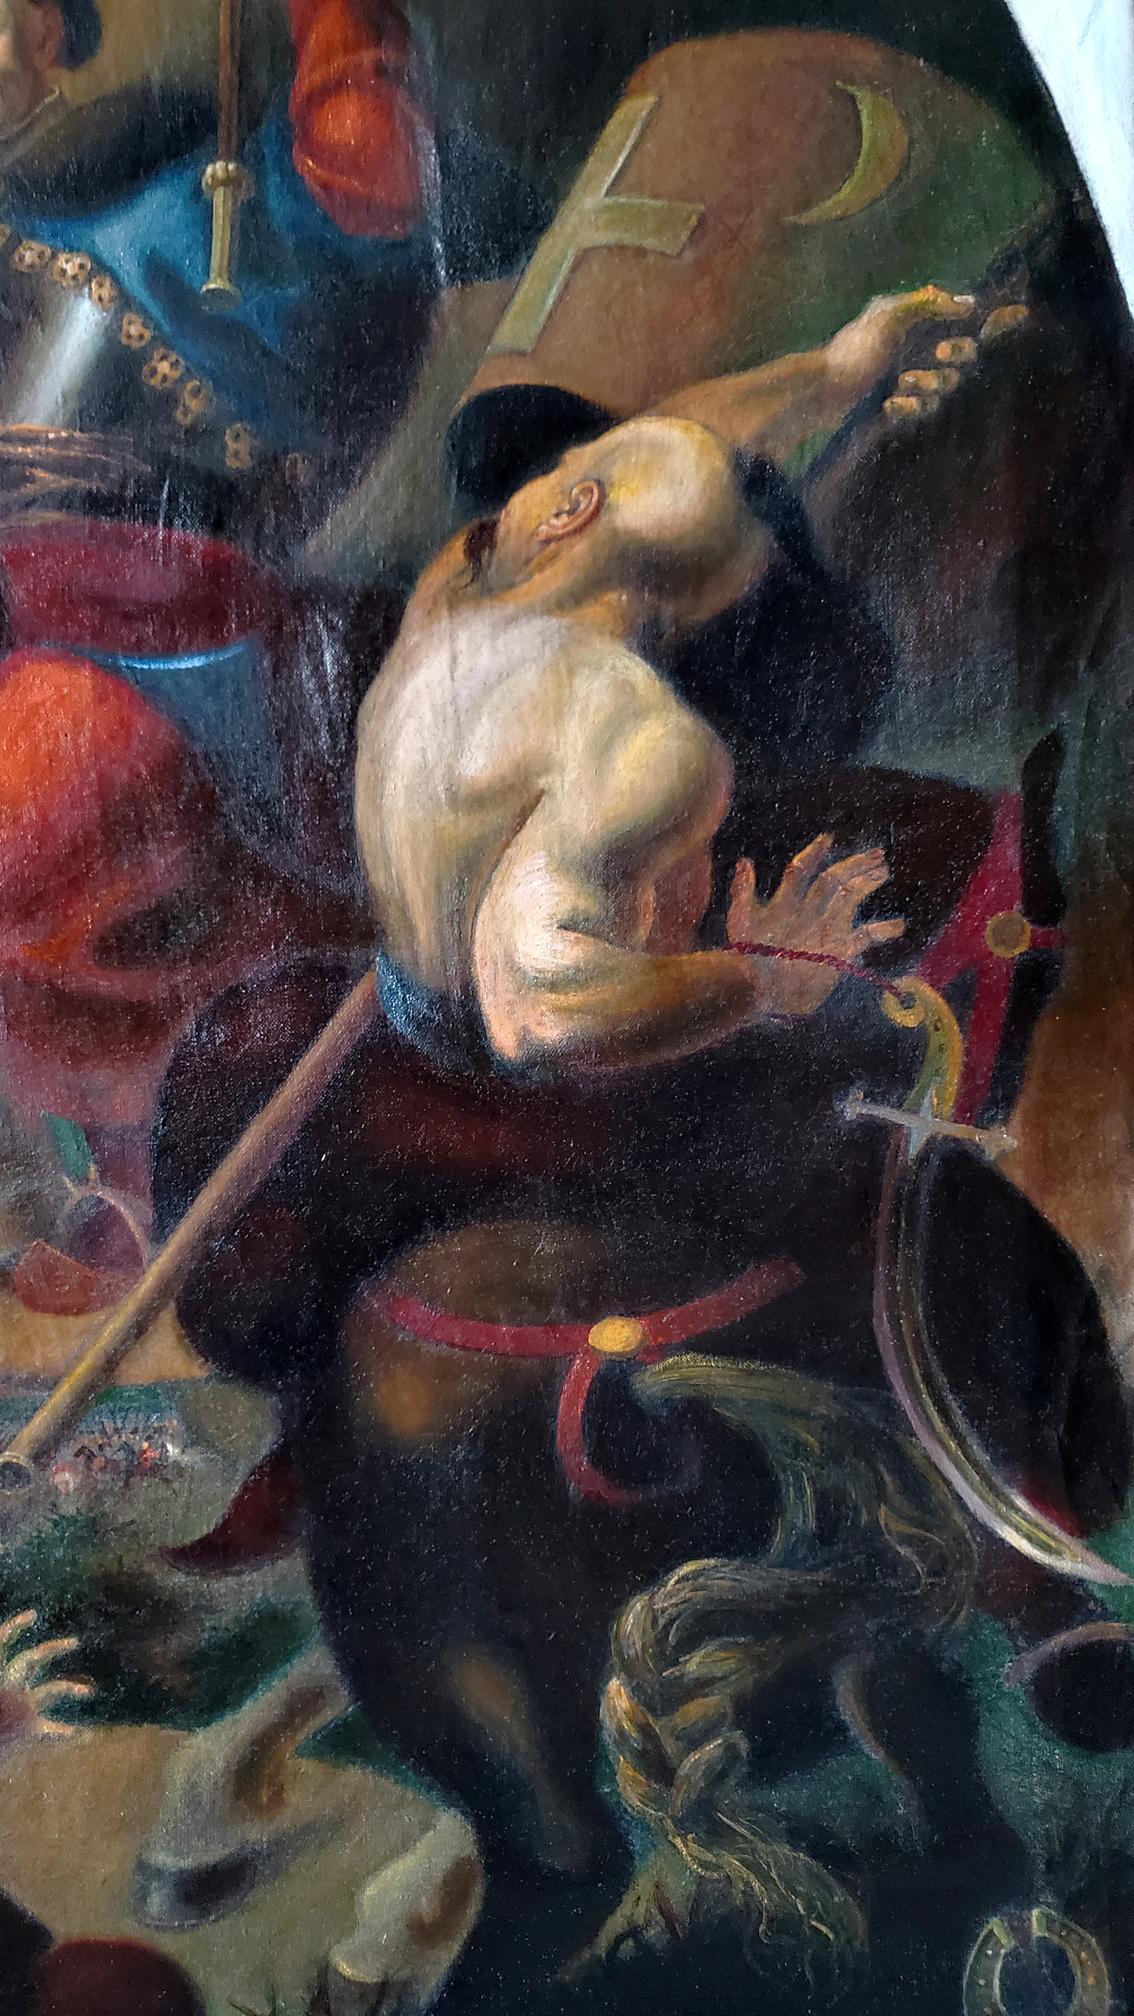 In Daniil Olegovich Litvinov's oil painting, Bogdan Khmelnitsky is portrayed